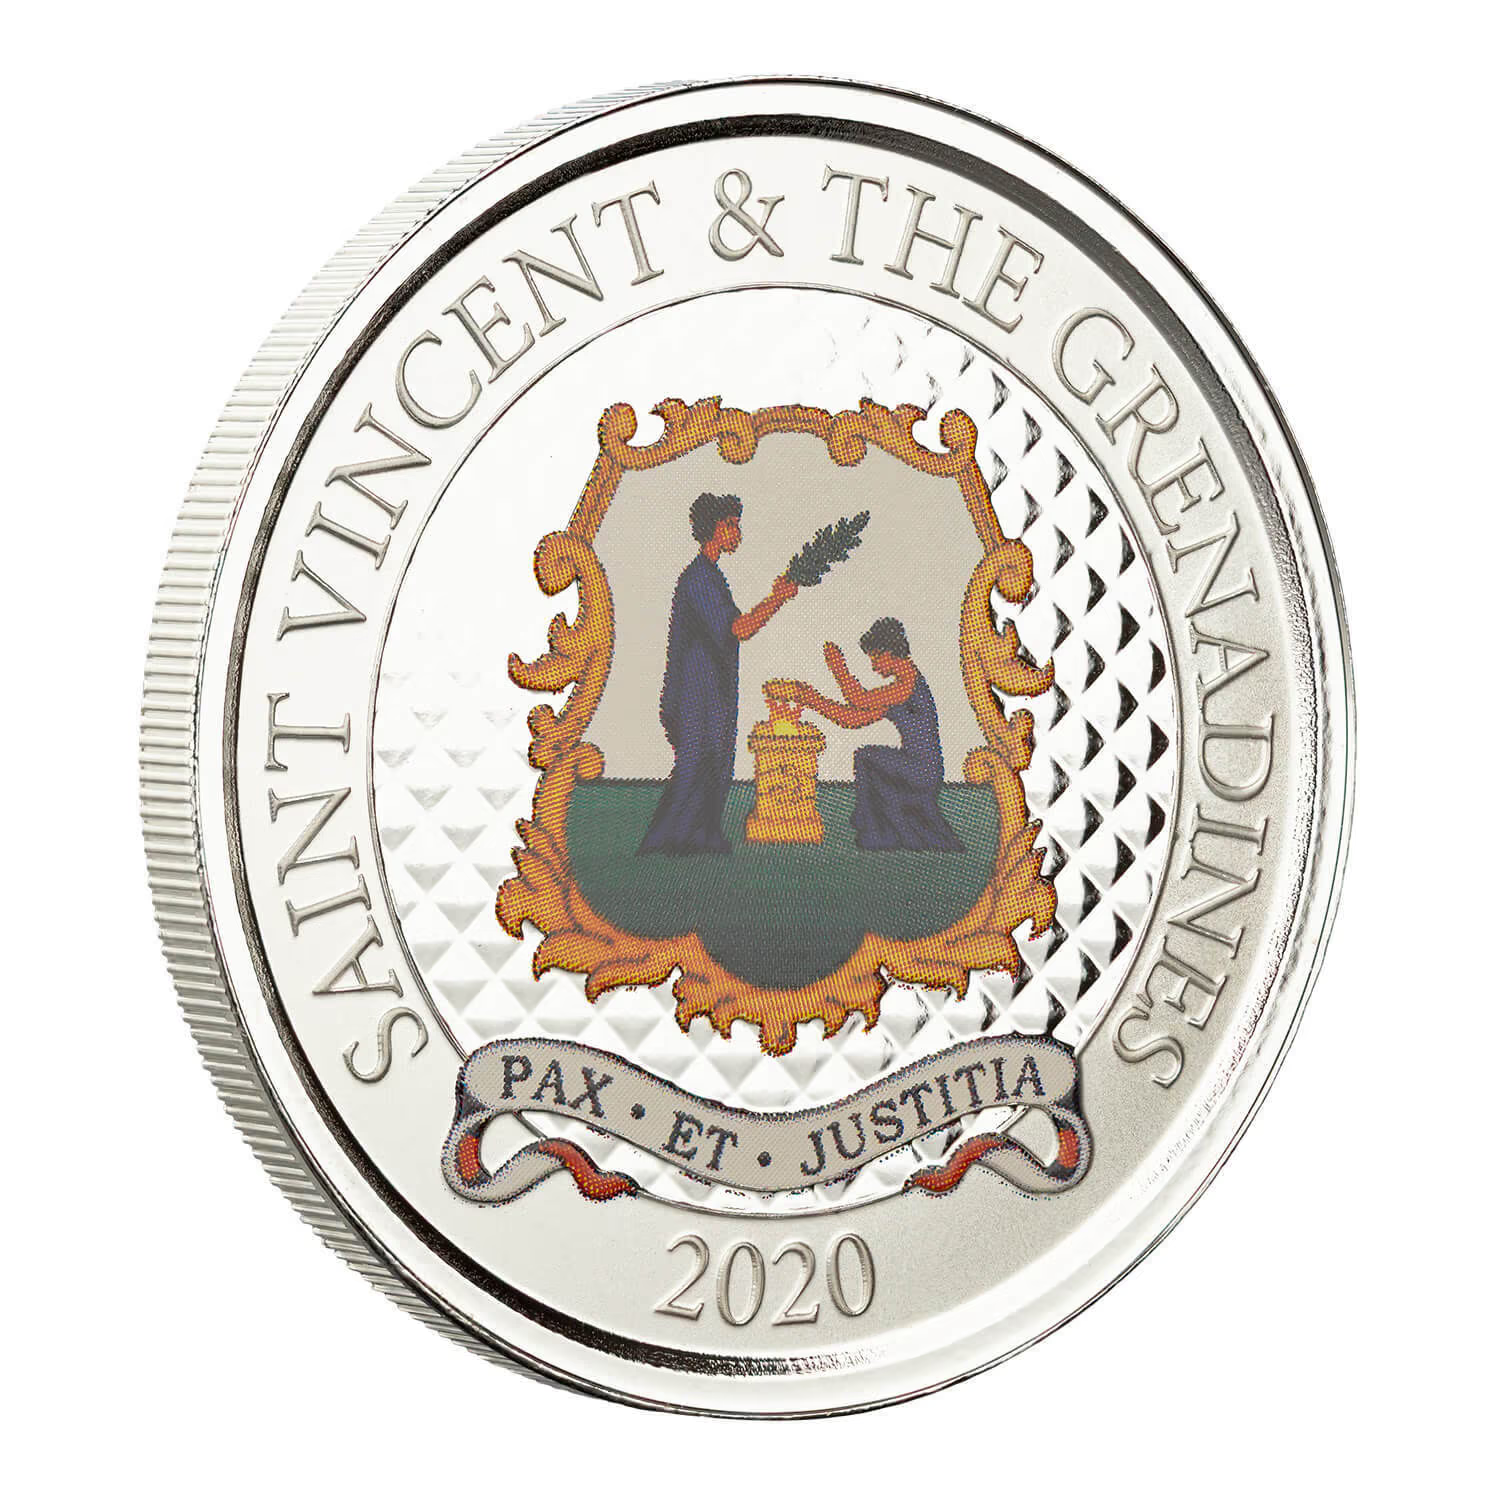 1 Oz Silver Coin 2020 EC8 St. Vincent & the Grenadines $2 Color Pax Et Justitia-classypw.com-1